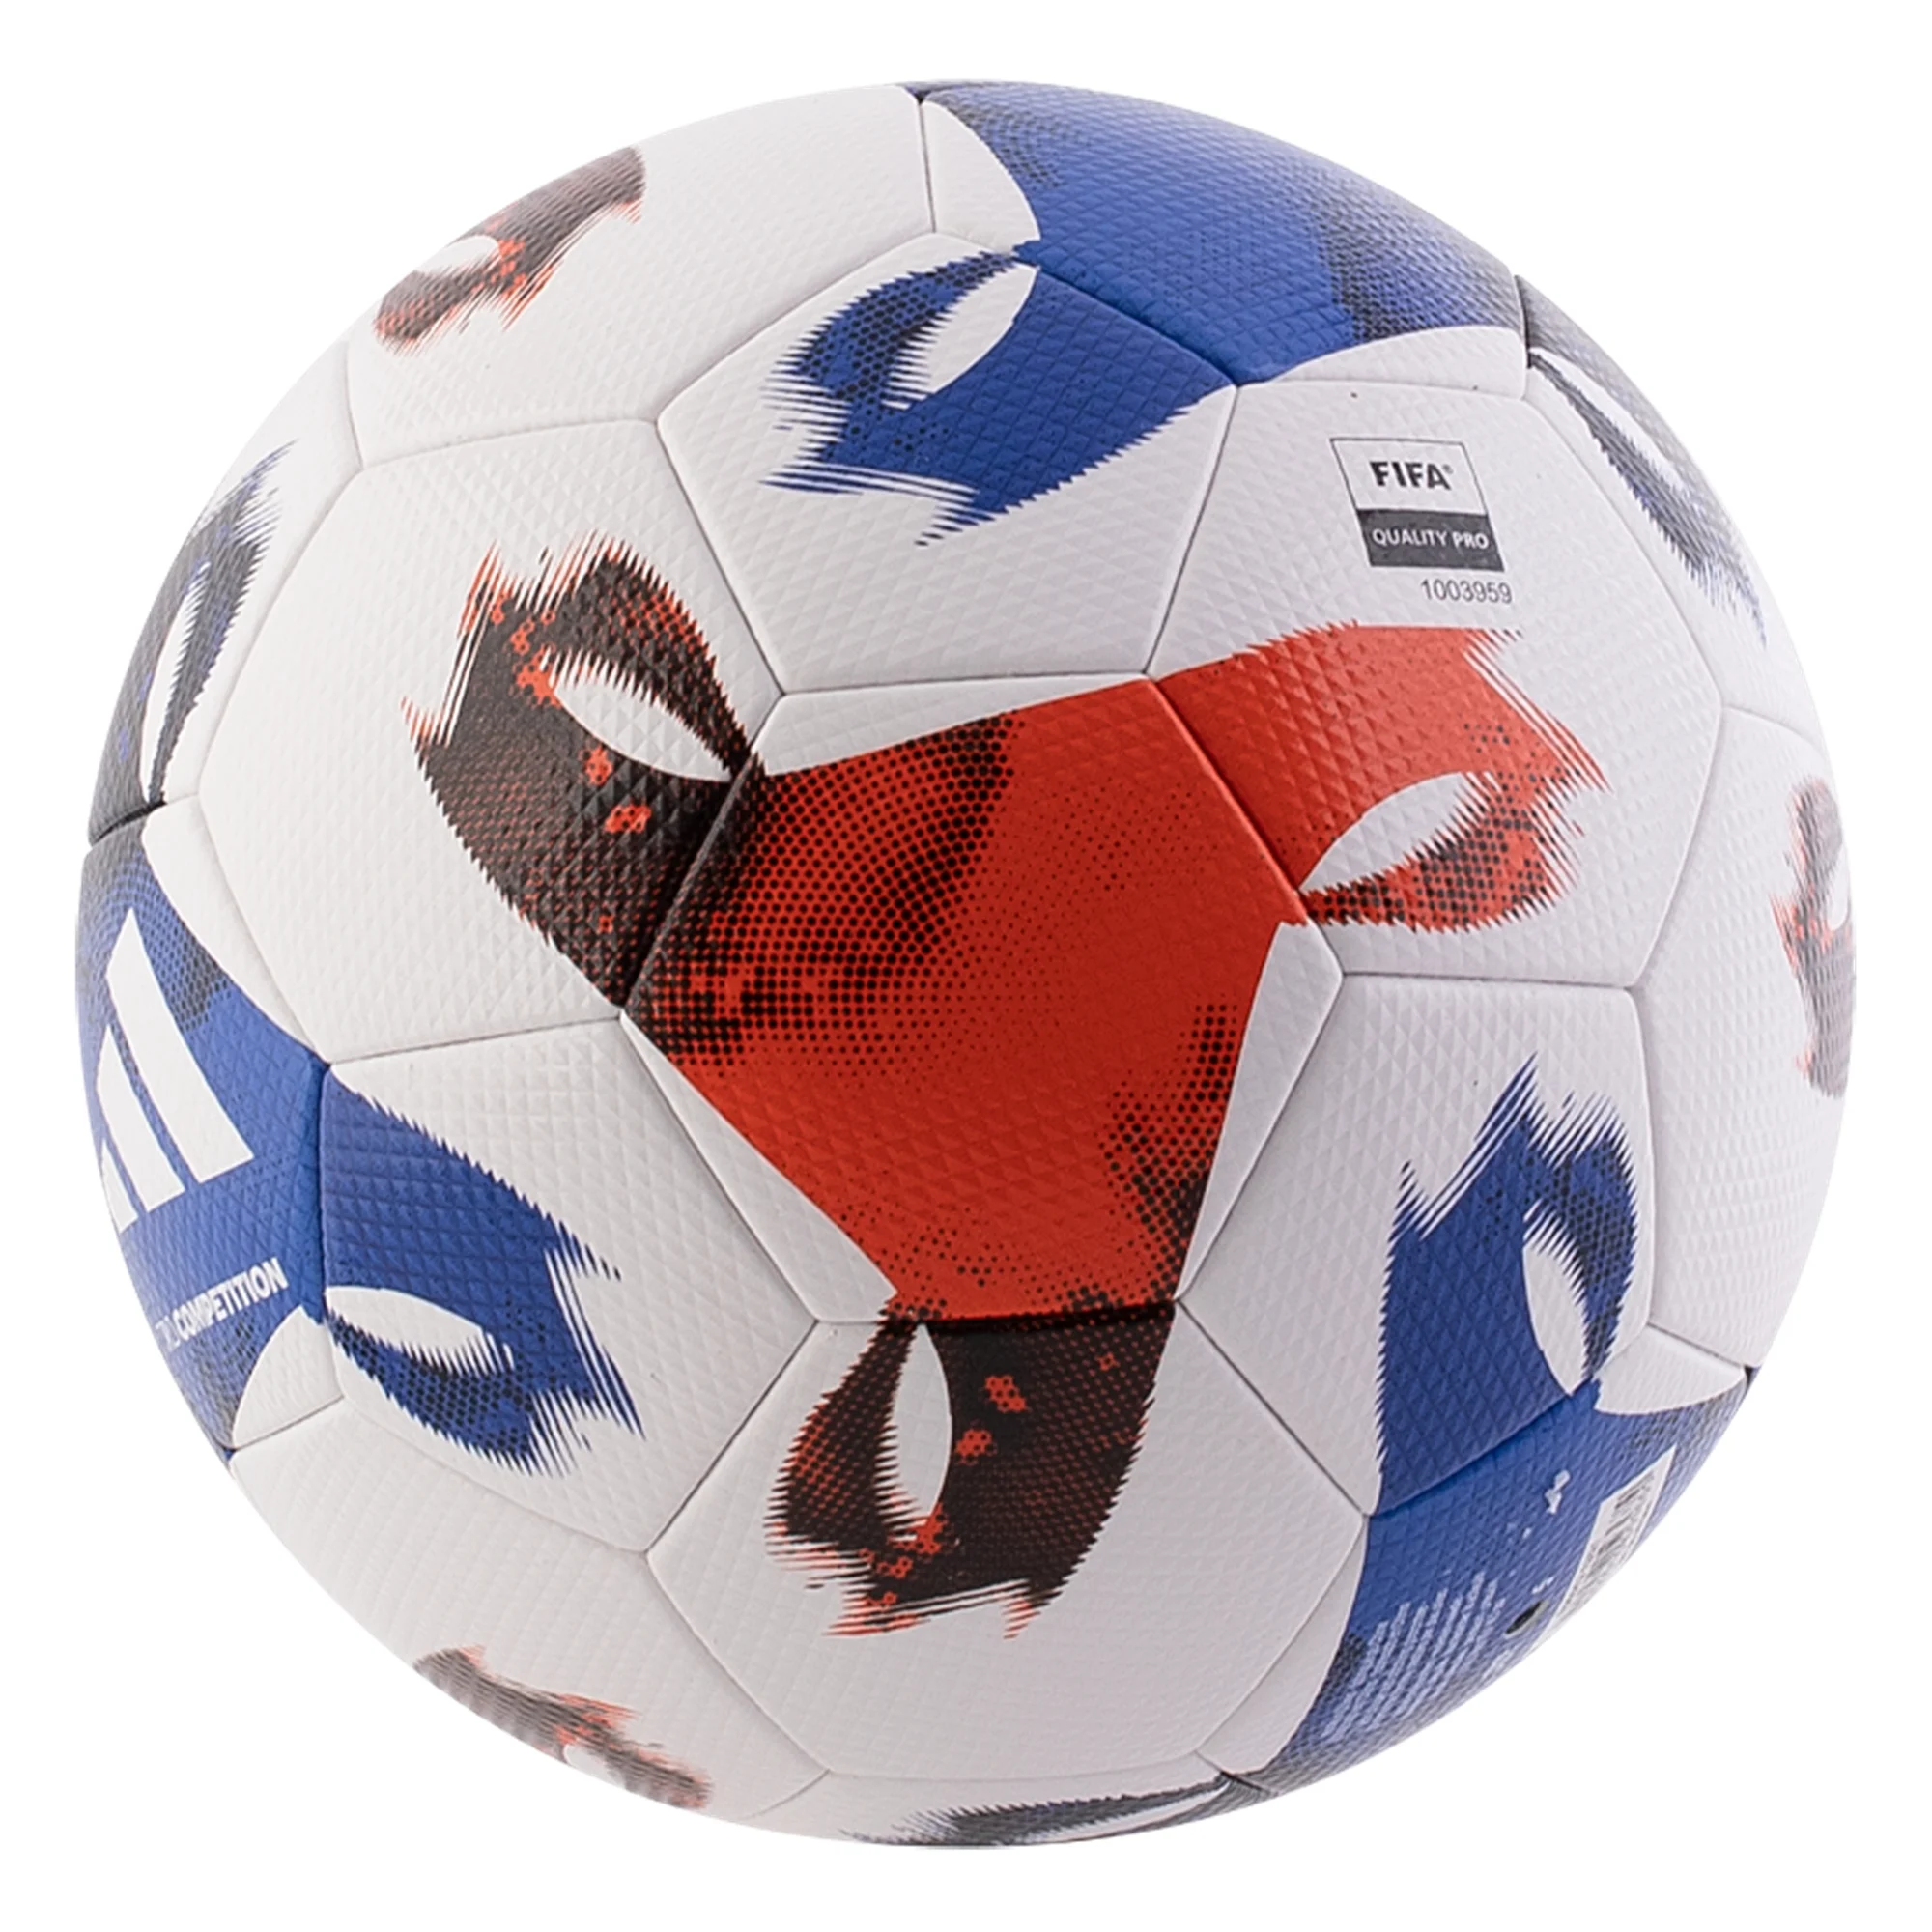 Adidas Tiro Competition Soccer Ball